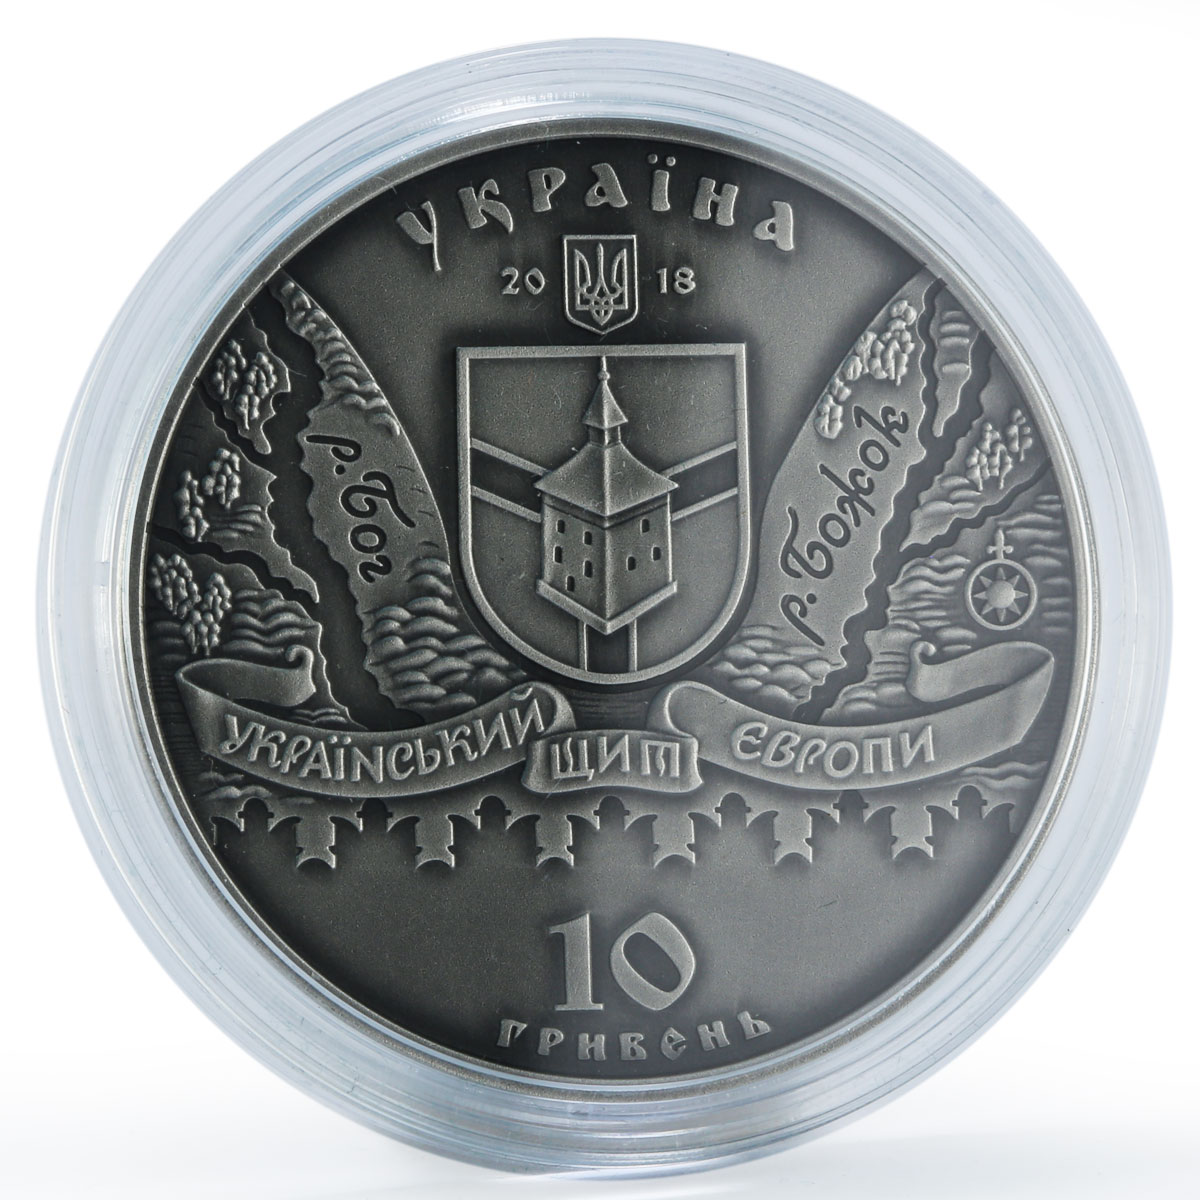 Ukraine 10 hryvnia Medzhybizh Fortress Castle silver coin 2018